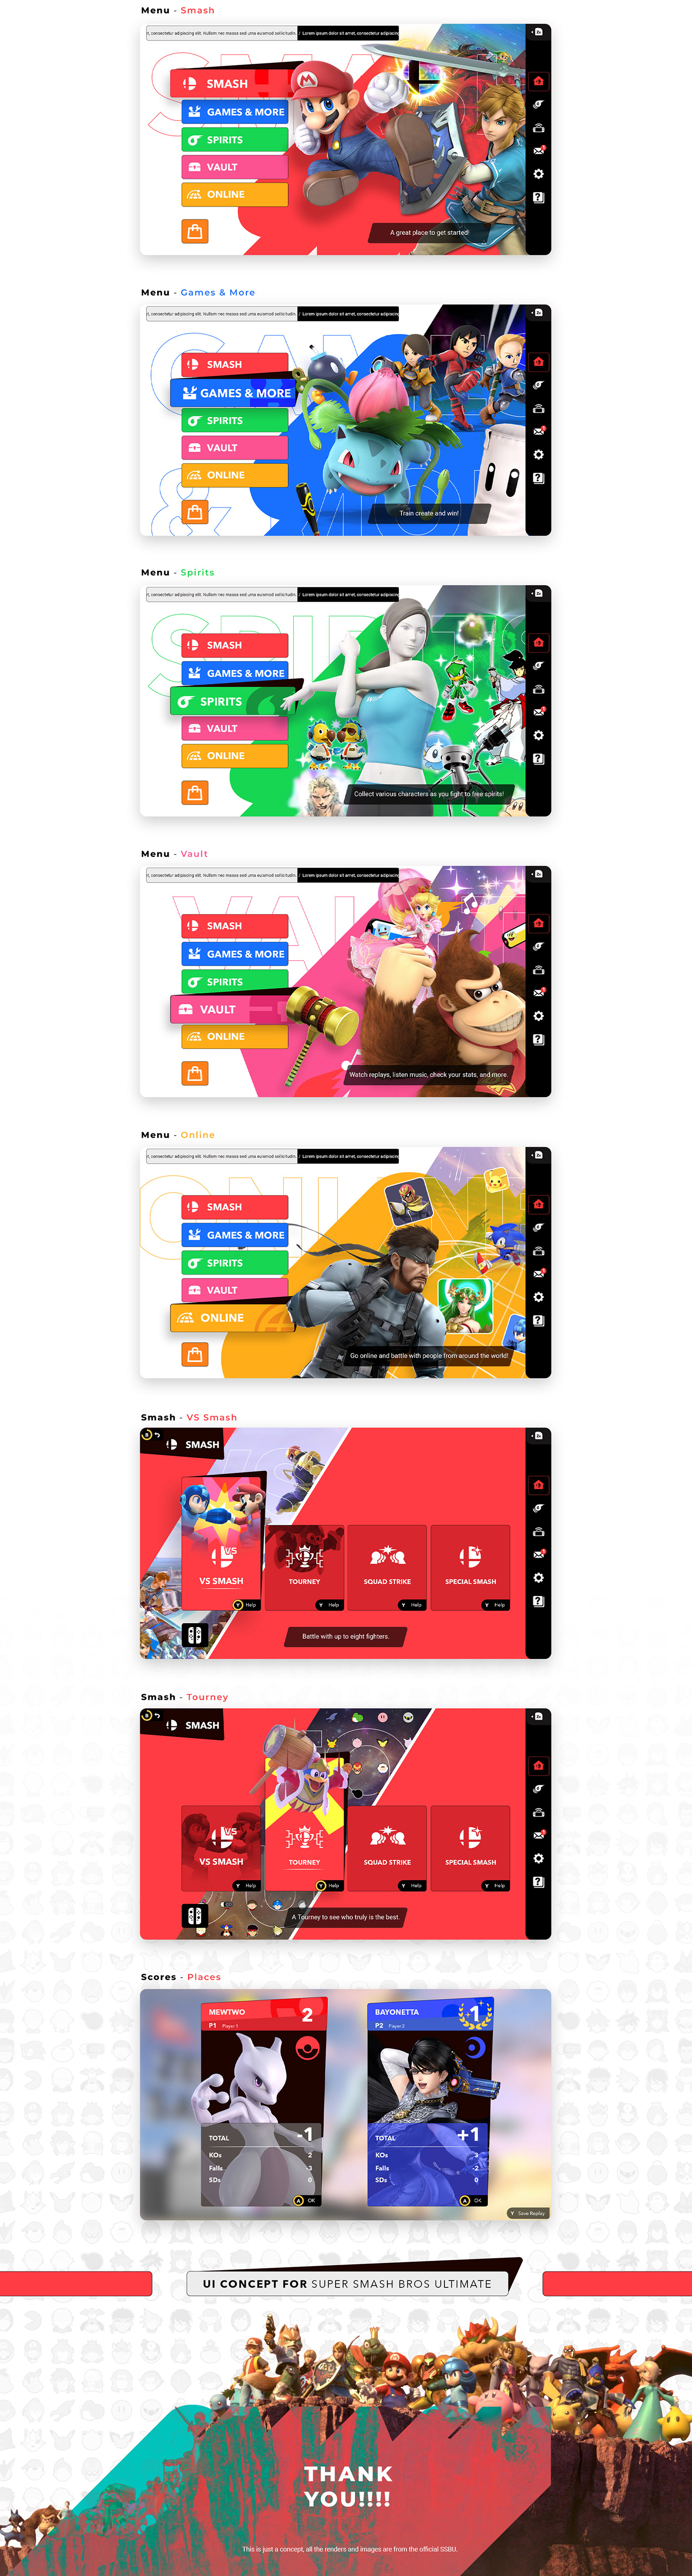 adobe concept game Nintendo SSBU switch UI video game visual